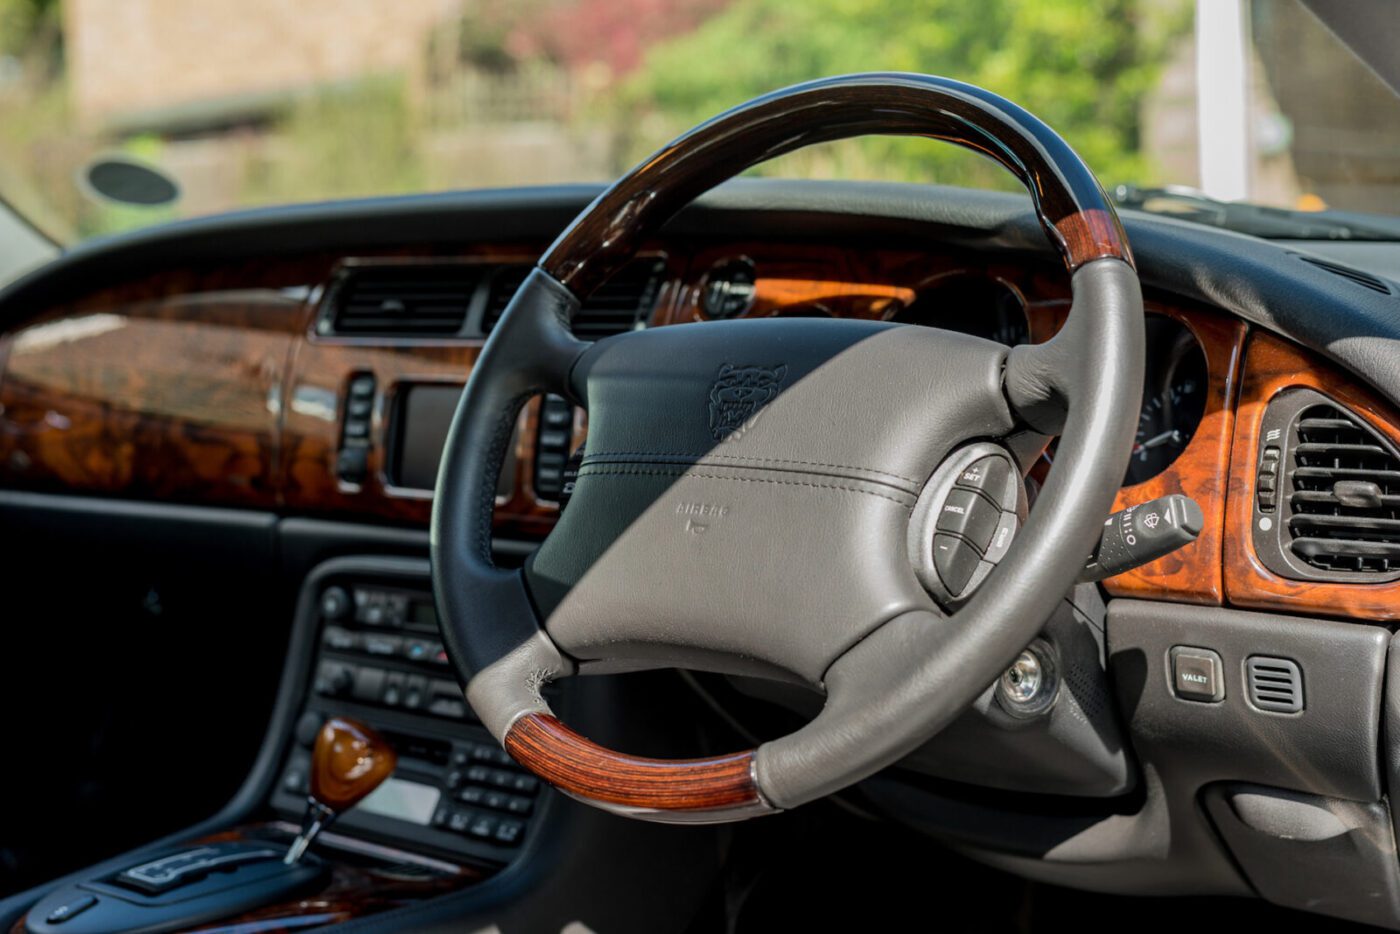 Inside the immaculate Jaguar XK8